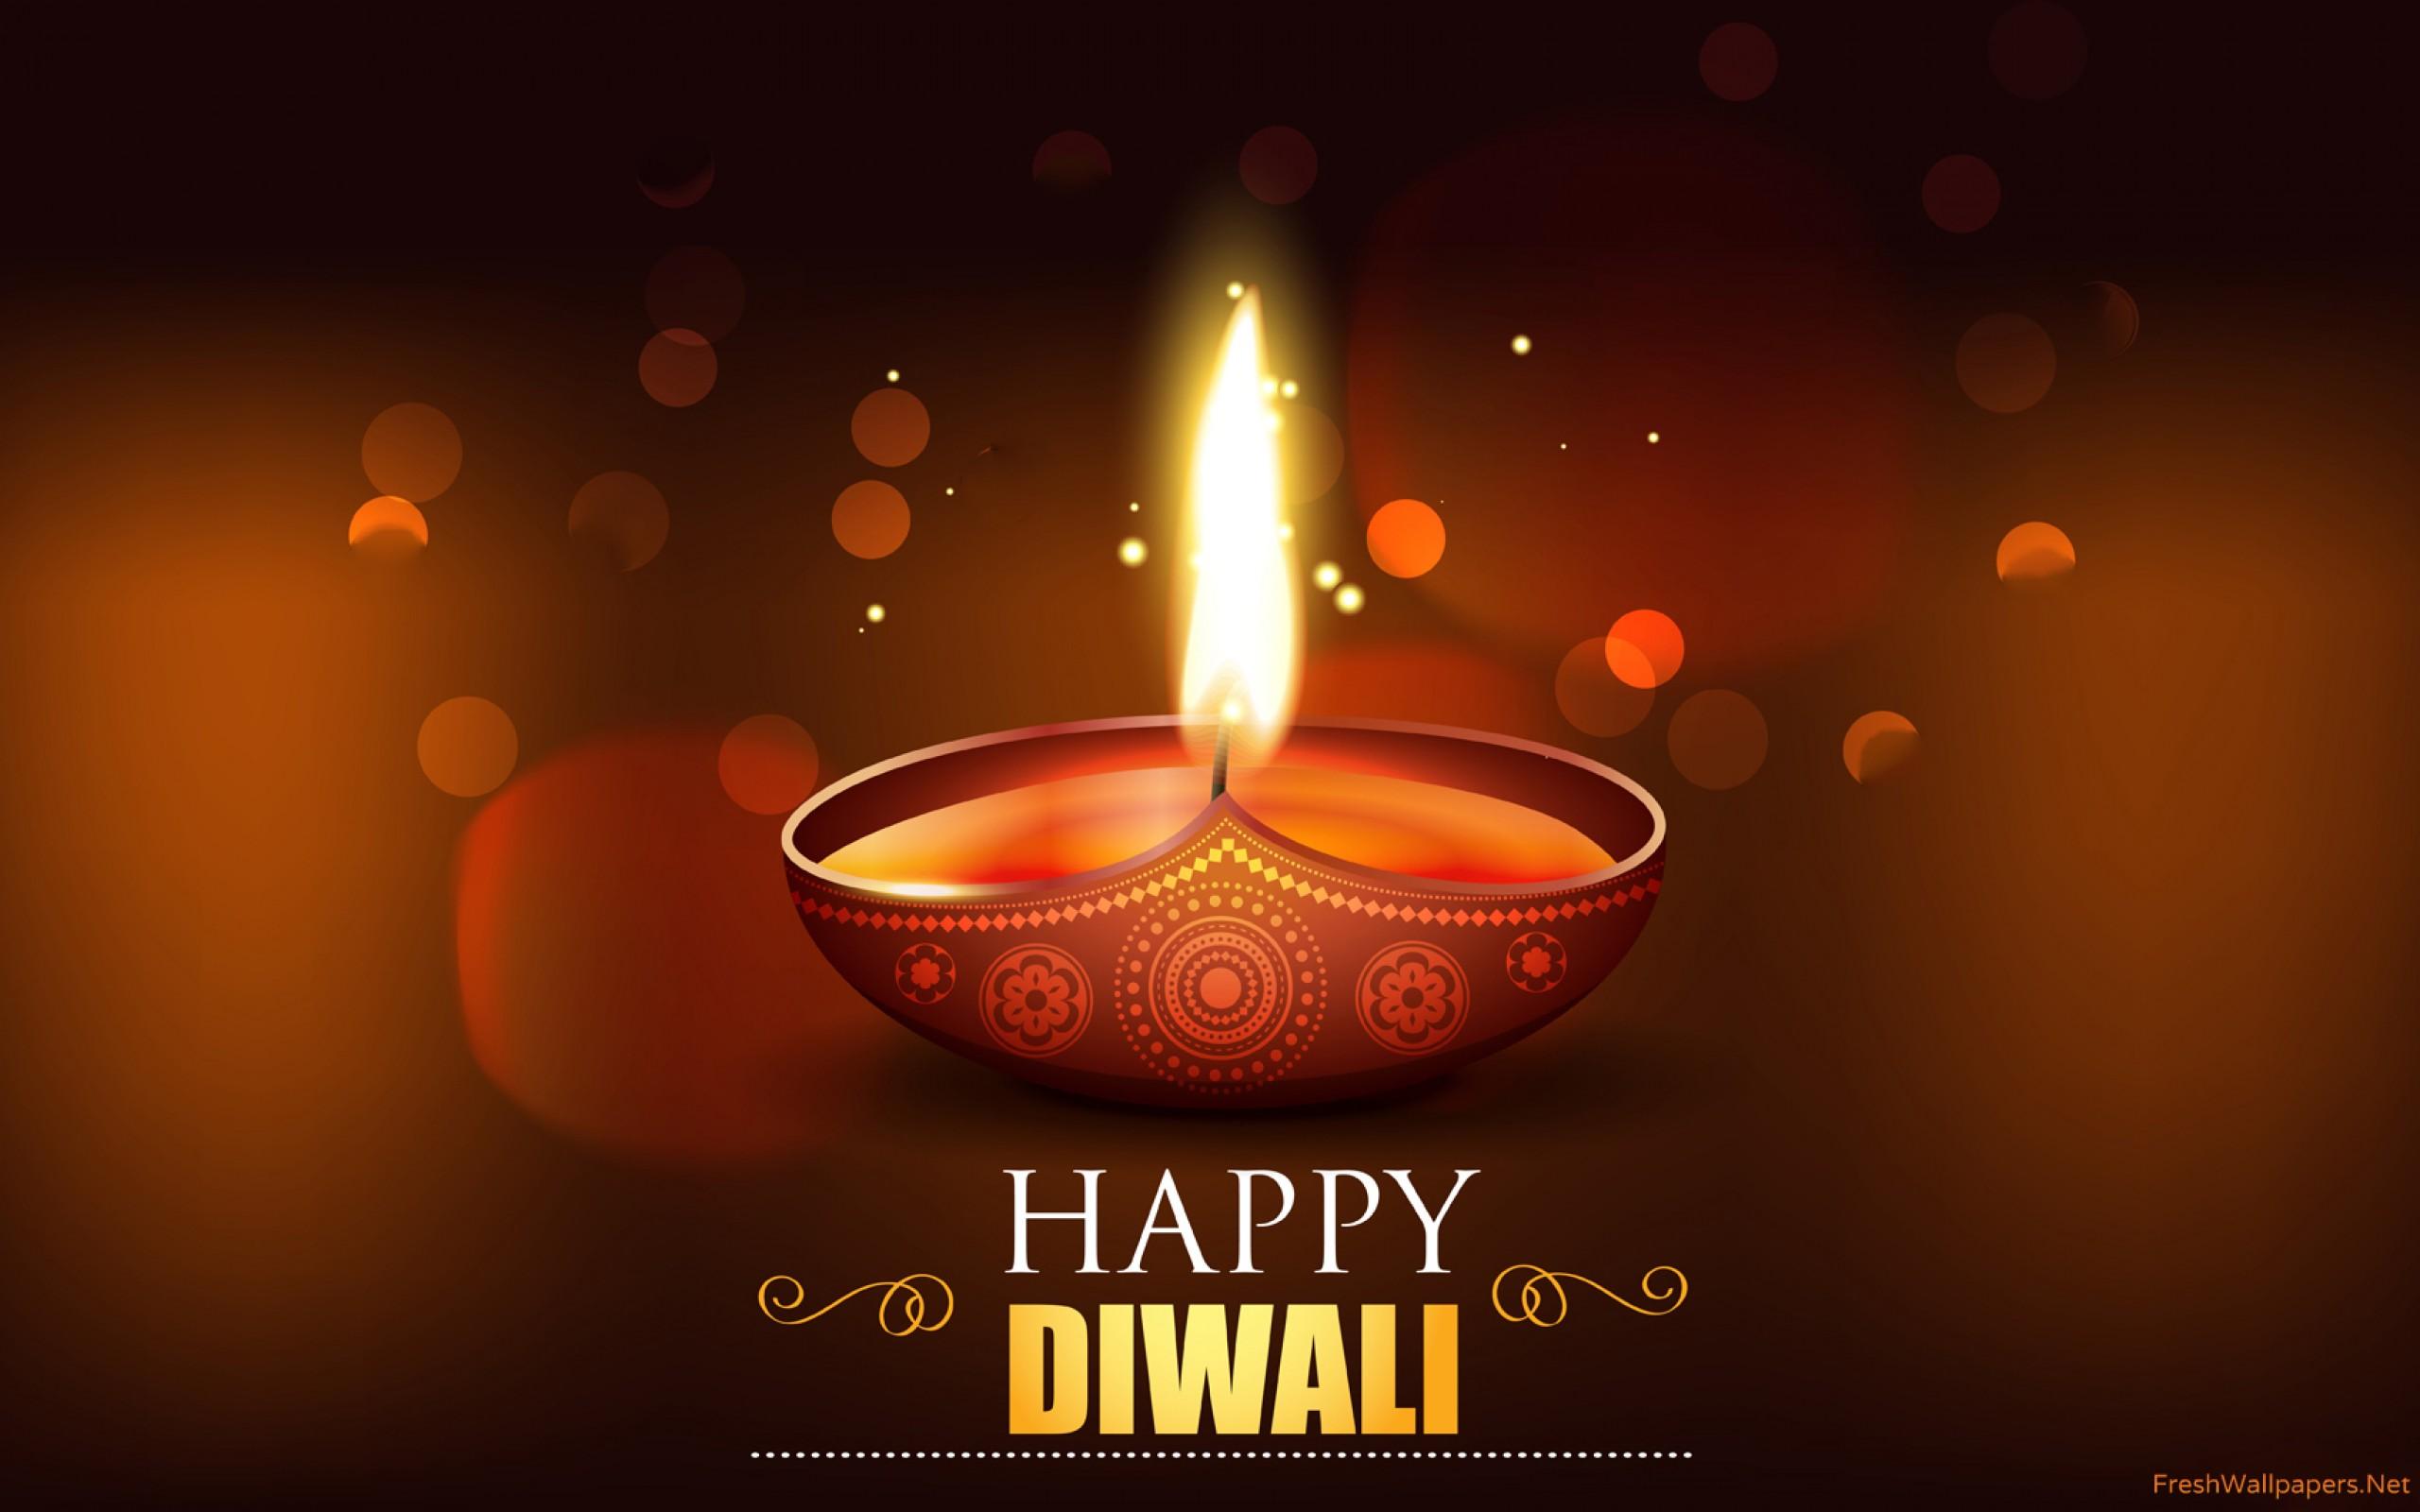 Wish you a very happy Diwali wallpaper